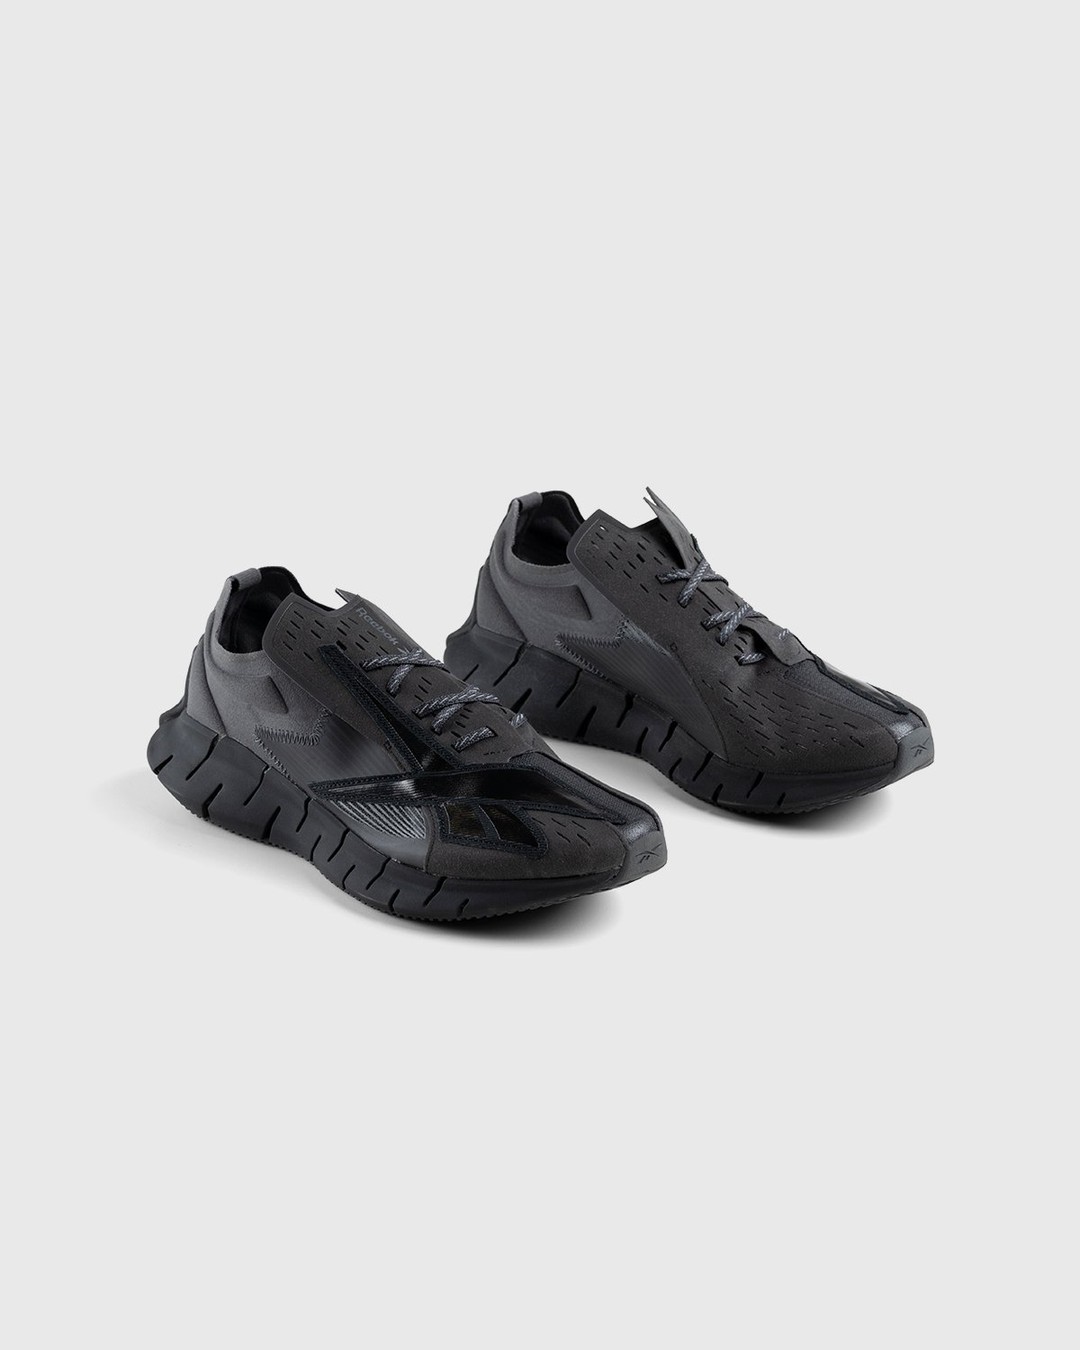 Reebok x Maison Margiela – Zig 3D Storm Memory Of Black - Sneakers - Black - Image 4